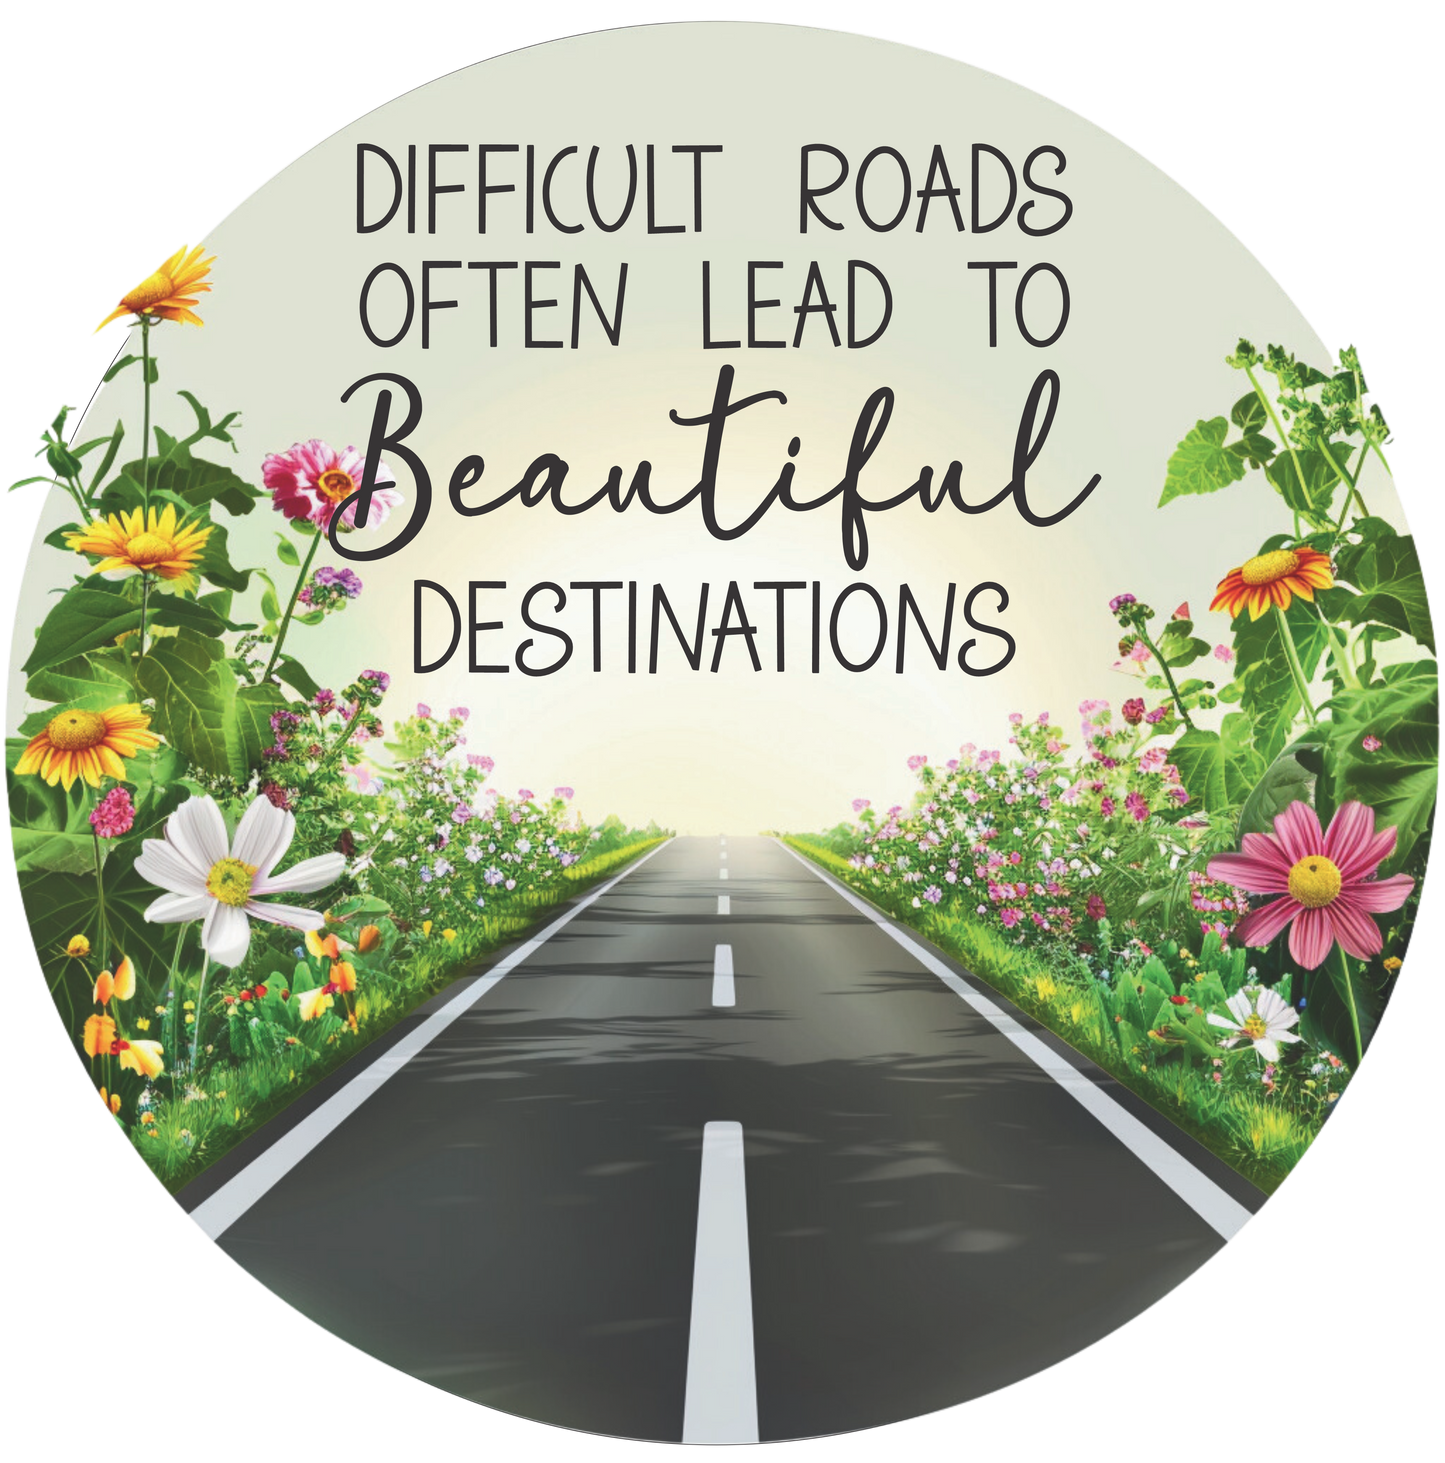 Difficult roads often lean to beautiful designations round